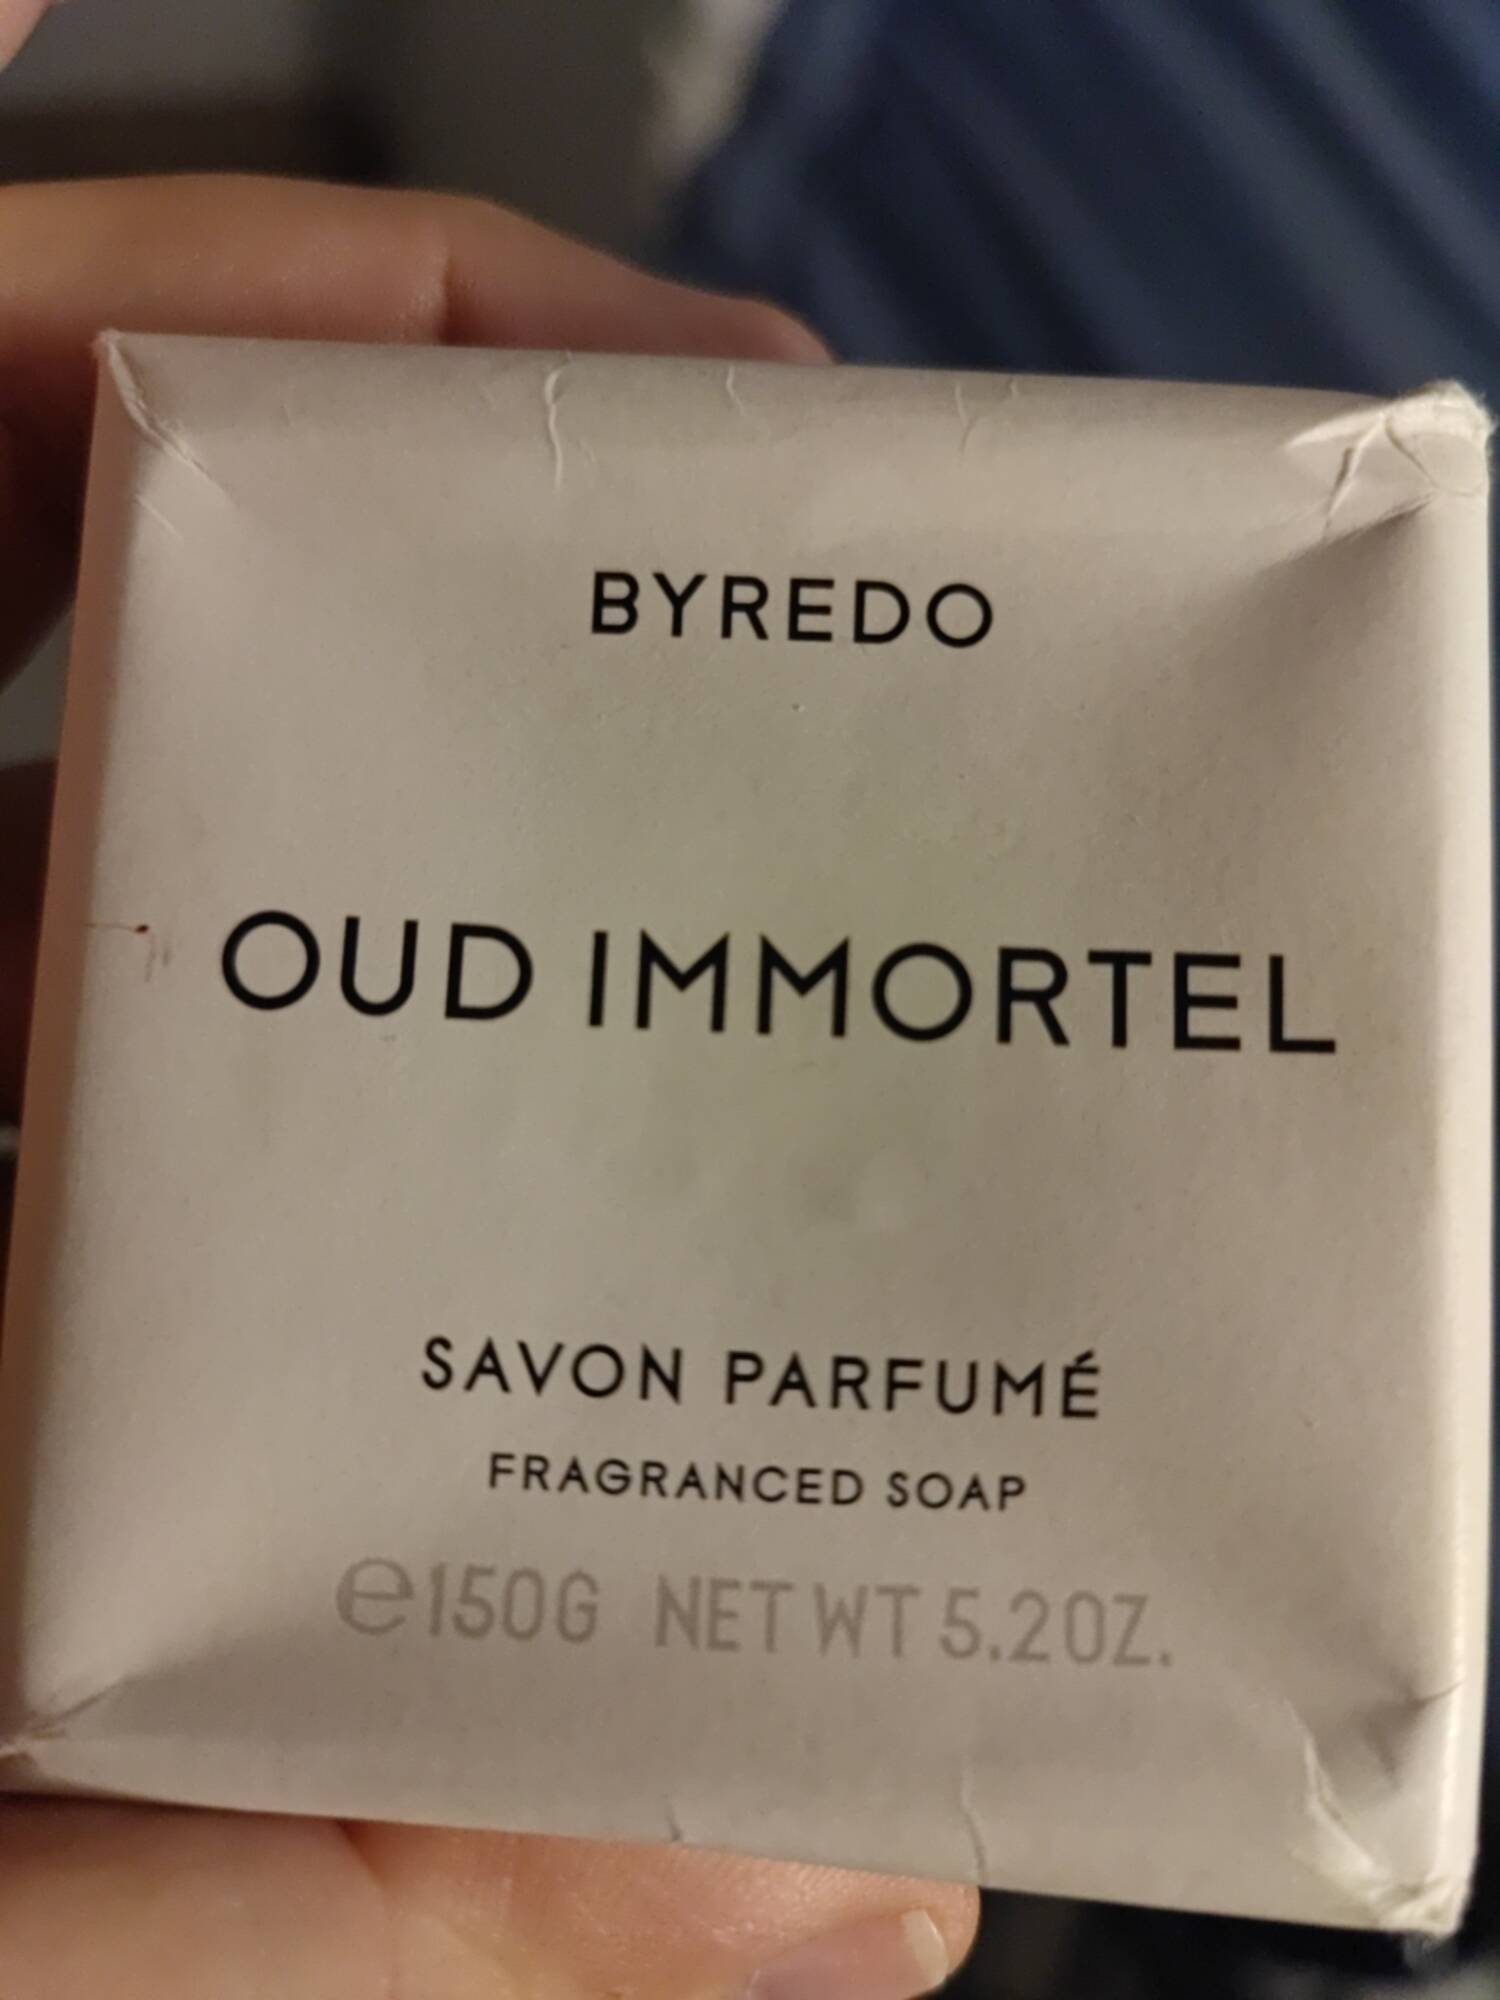 BYREDO - Oud immortel - Savon parfumé